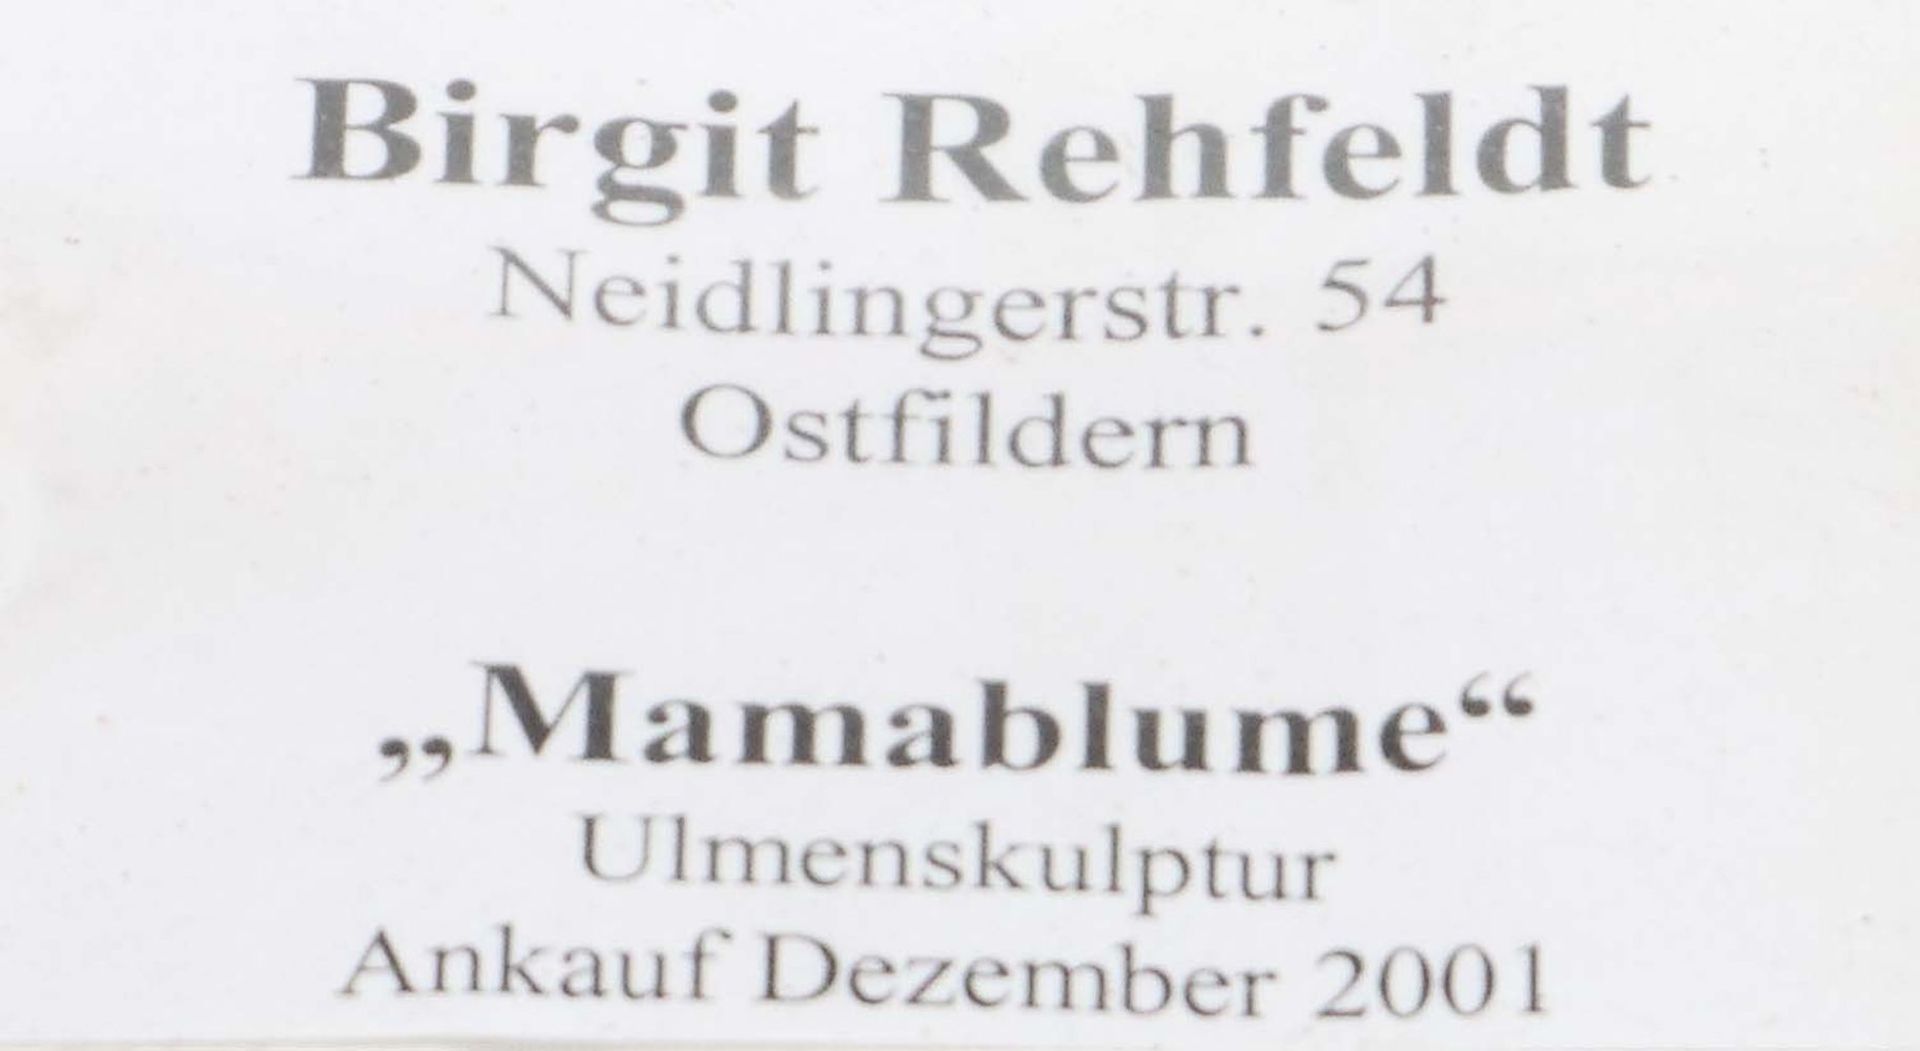 Rehfeldt, Birgit geb. 1965 in Hamburg, - Image 3 of 3